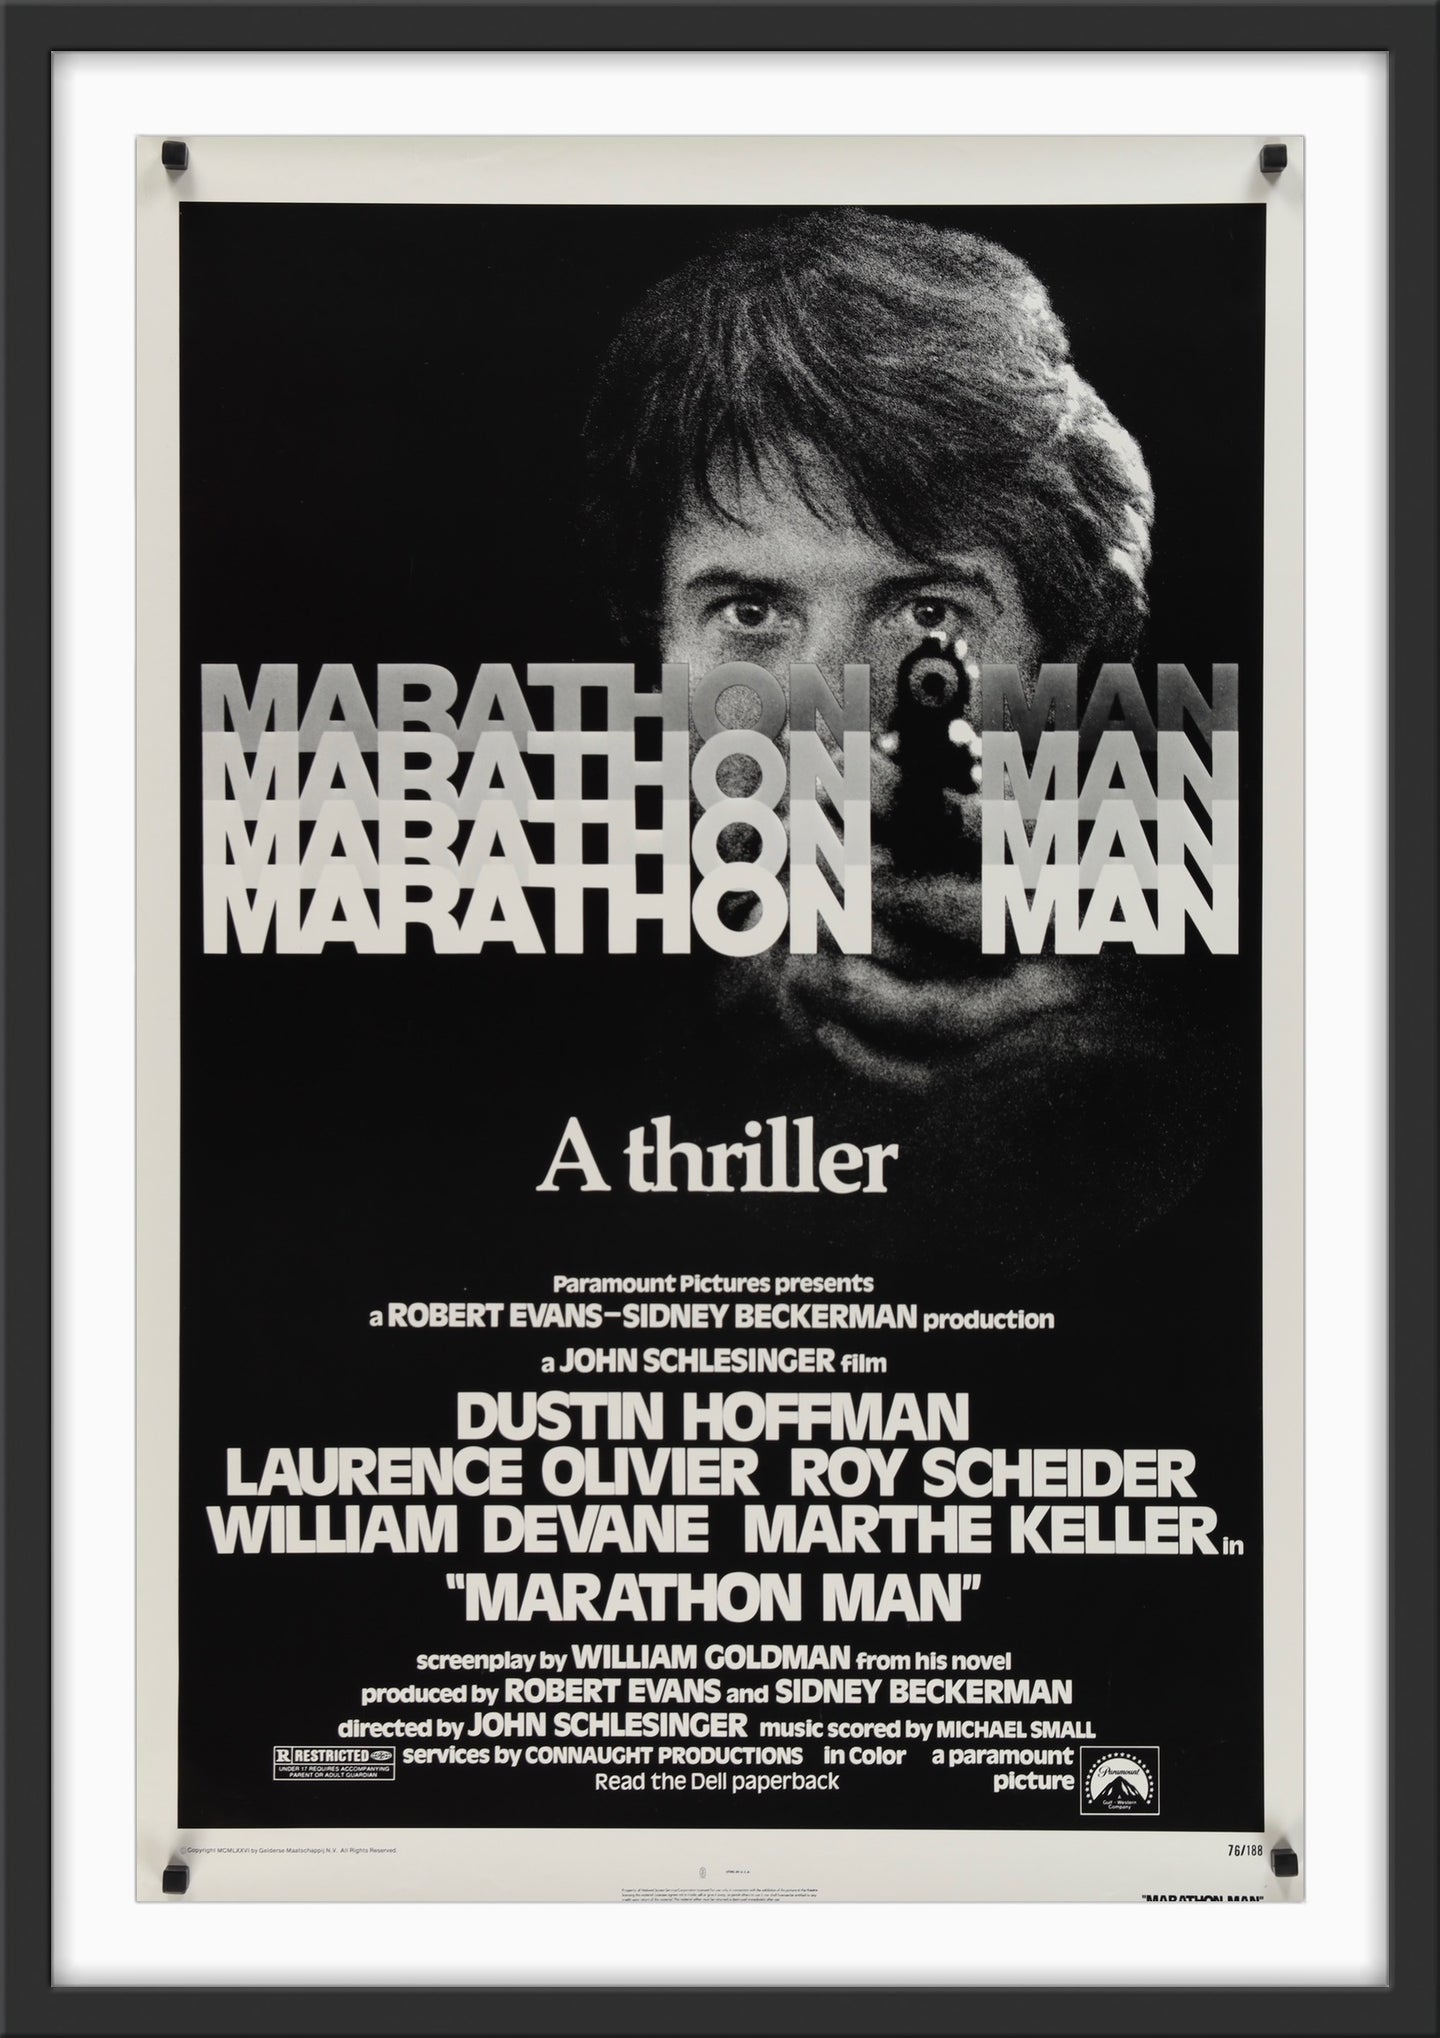 An original movie poster for the Dustin Hoffman film Marathon Man